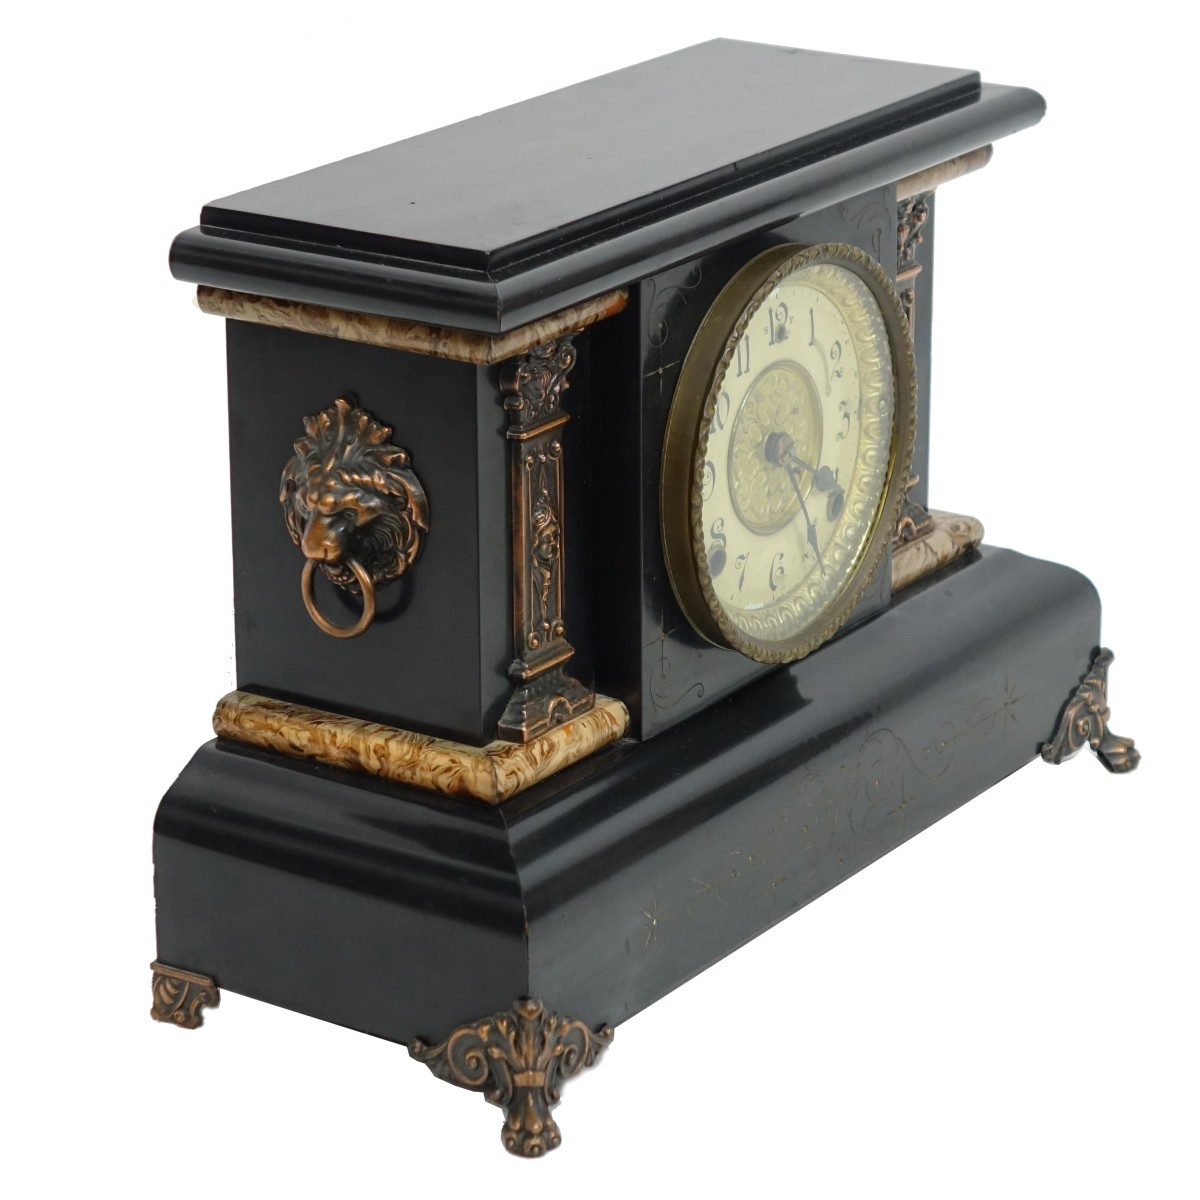 William L. Gilbert Clock Co. Mantle Clock